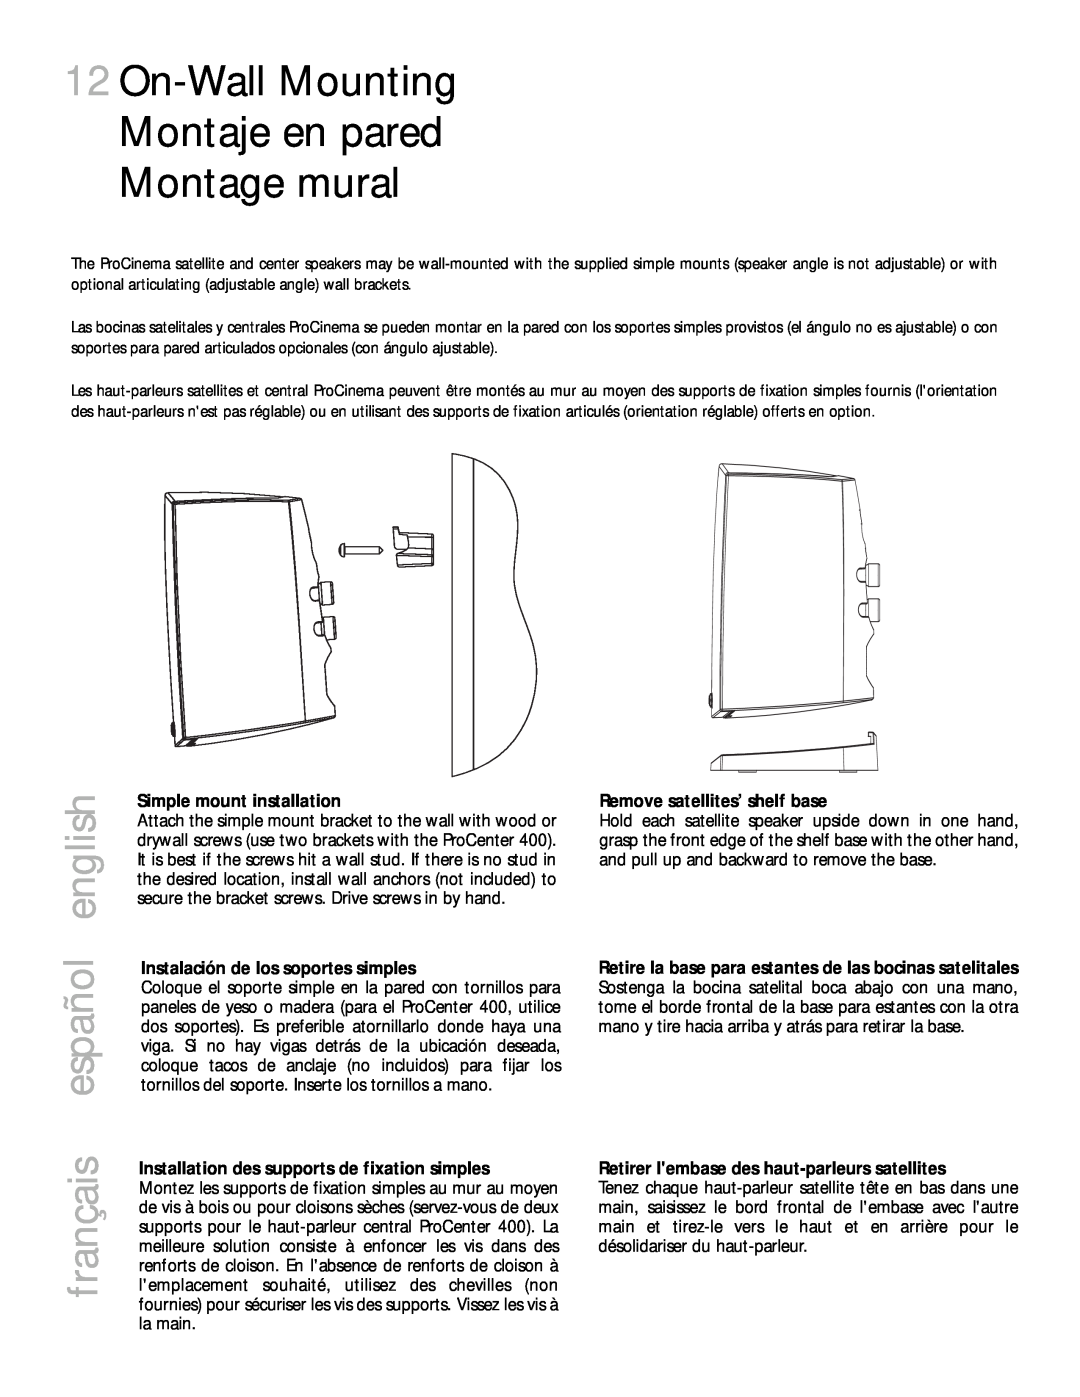 Definitive Technology 400 owner manual On-WallMounting Montaje en pared Montage mural, español english, français 